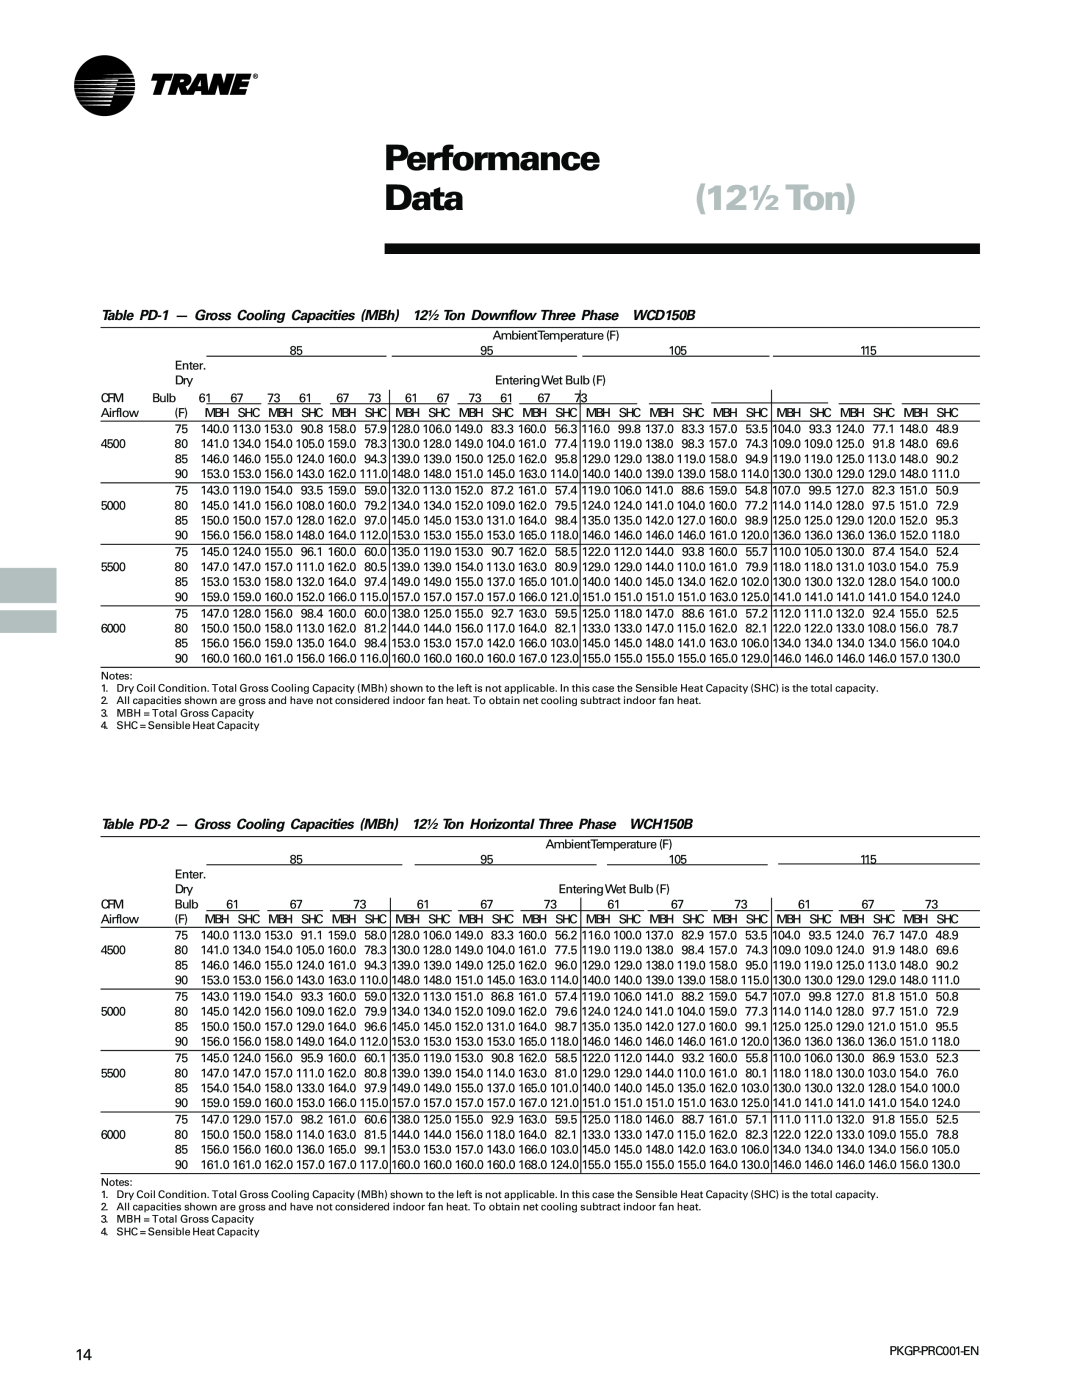 Trane PKGP-PRC001-EN manual Performance, Data12½Ton, Table PD-1- Gross Cooling Capacities MBh 